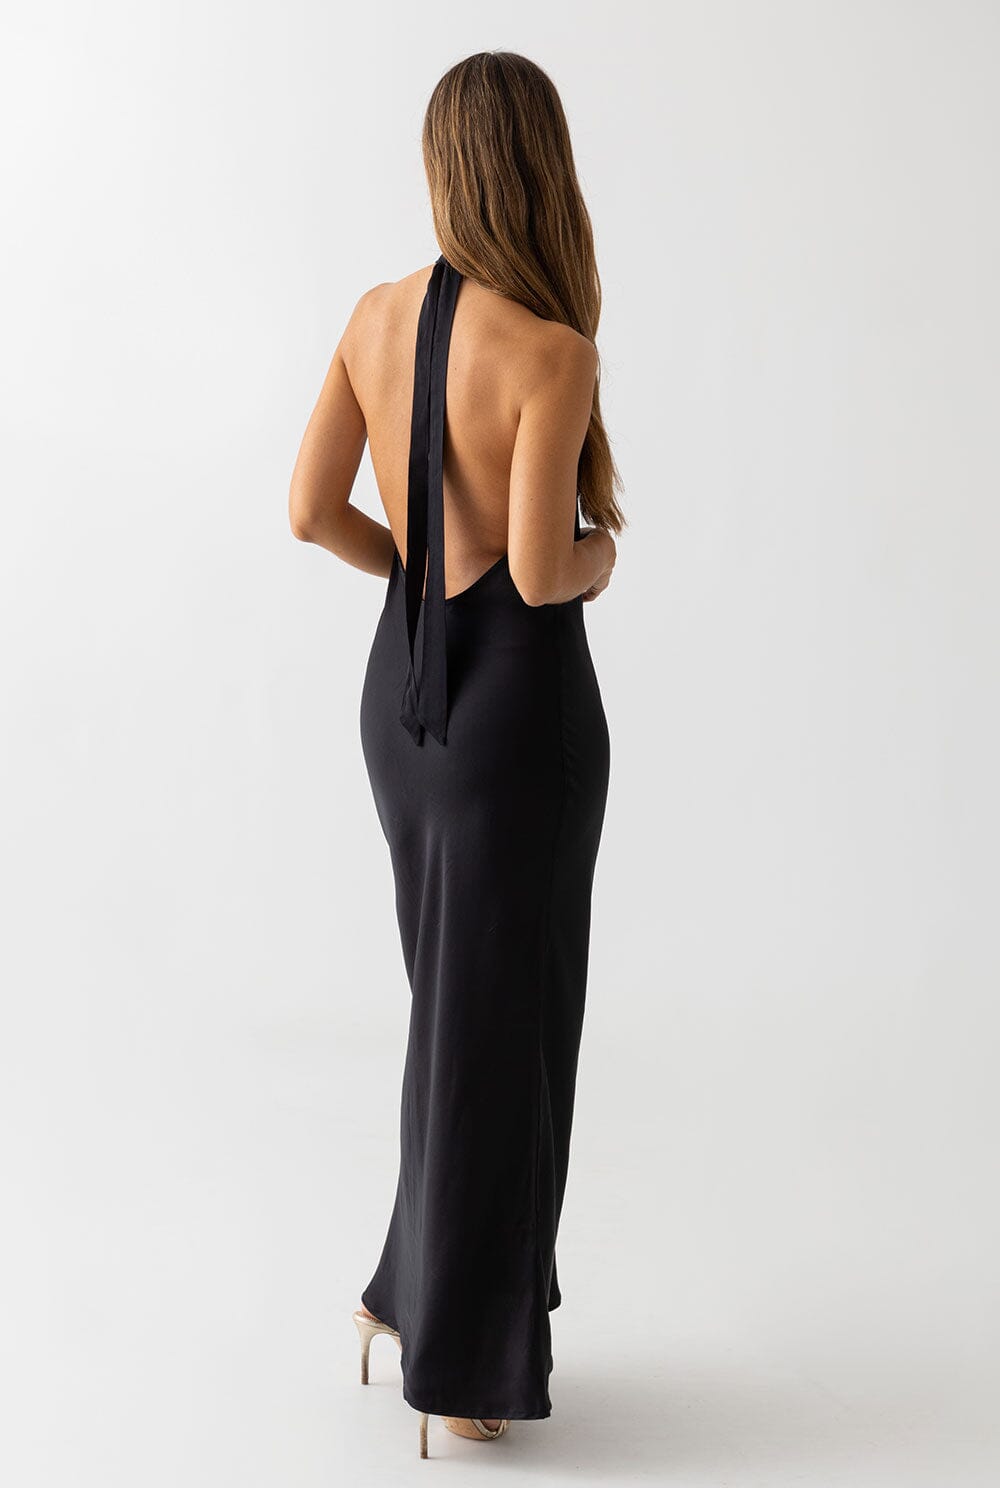 HALTER BLACK DRESS Dresses The Villã Concept 